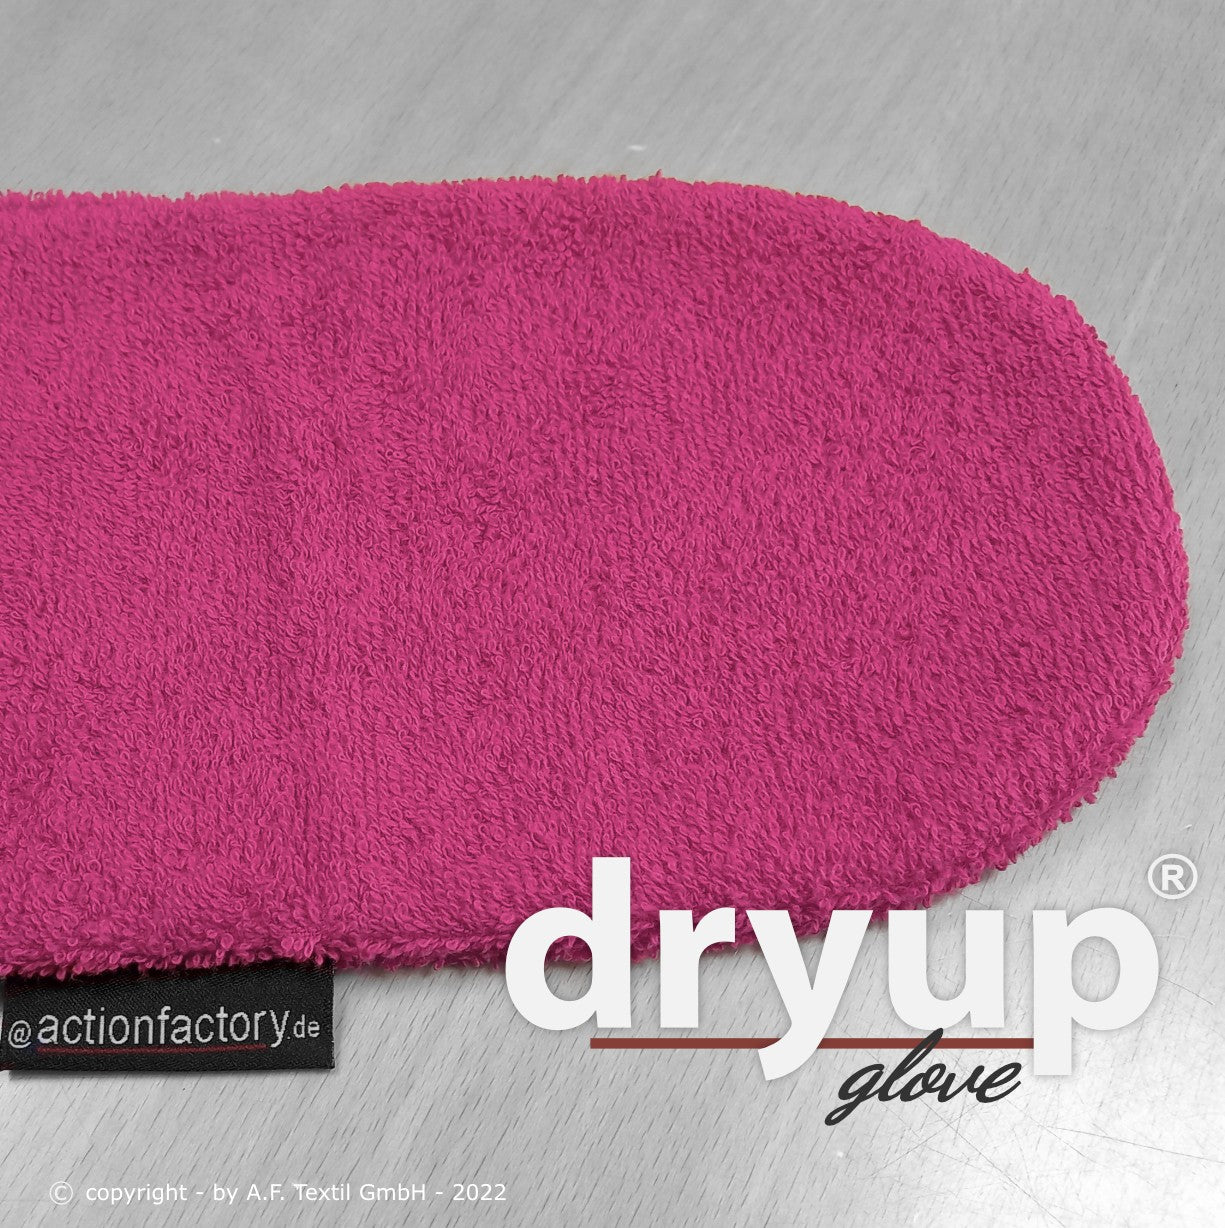 Dryup Glove - Discovery Fashion